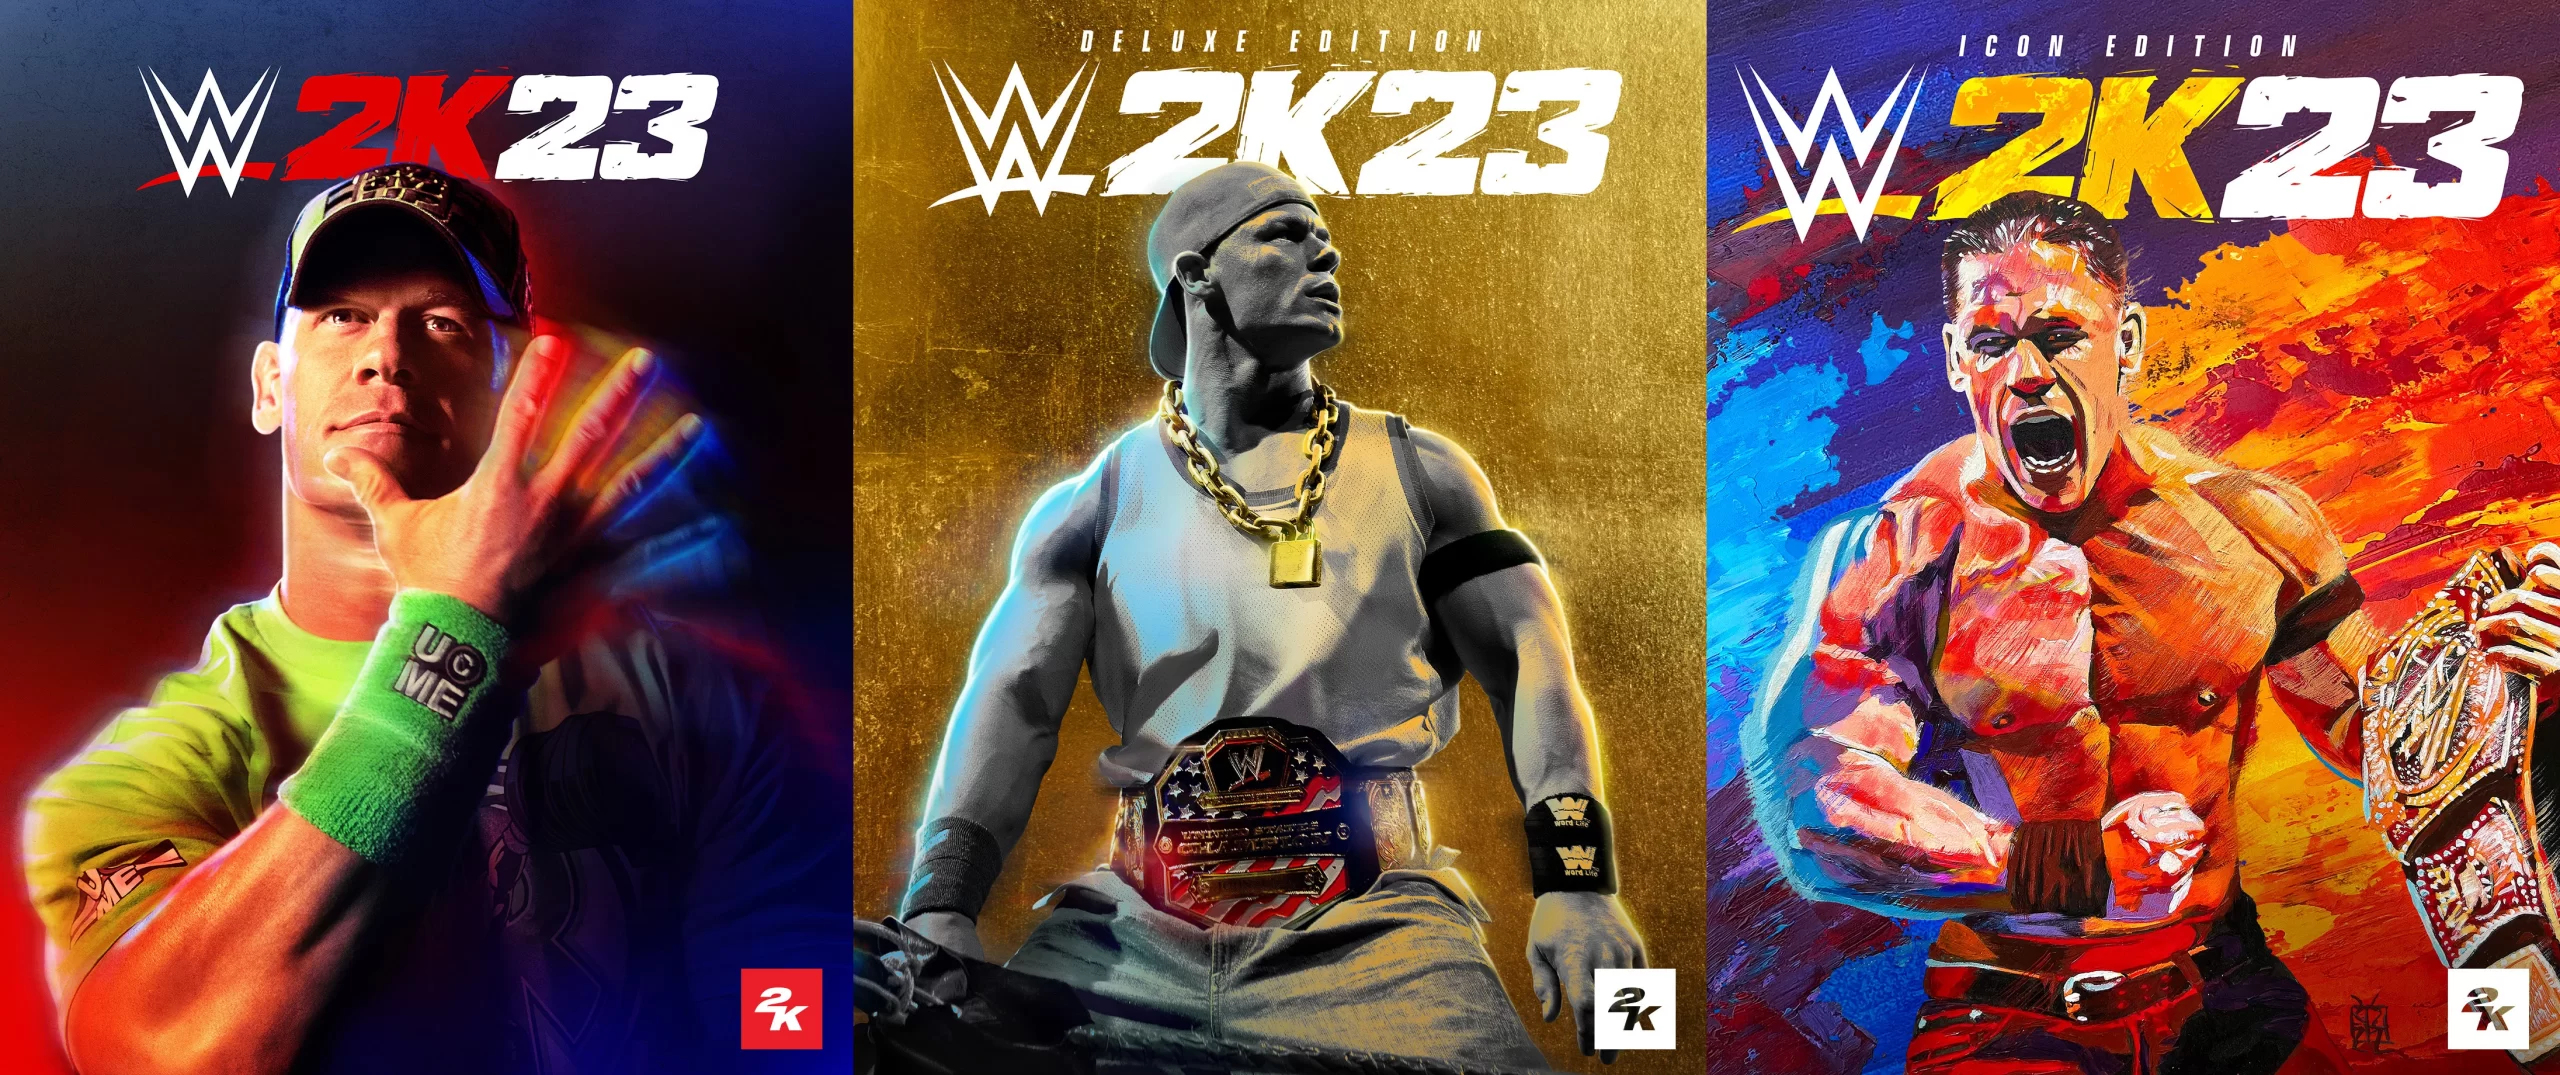 WWE-2K23 Video Game